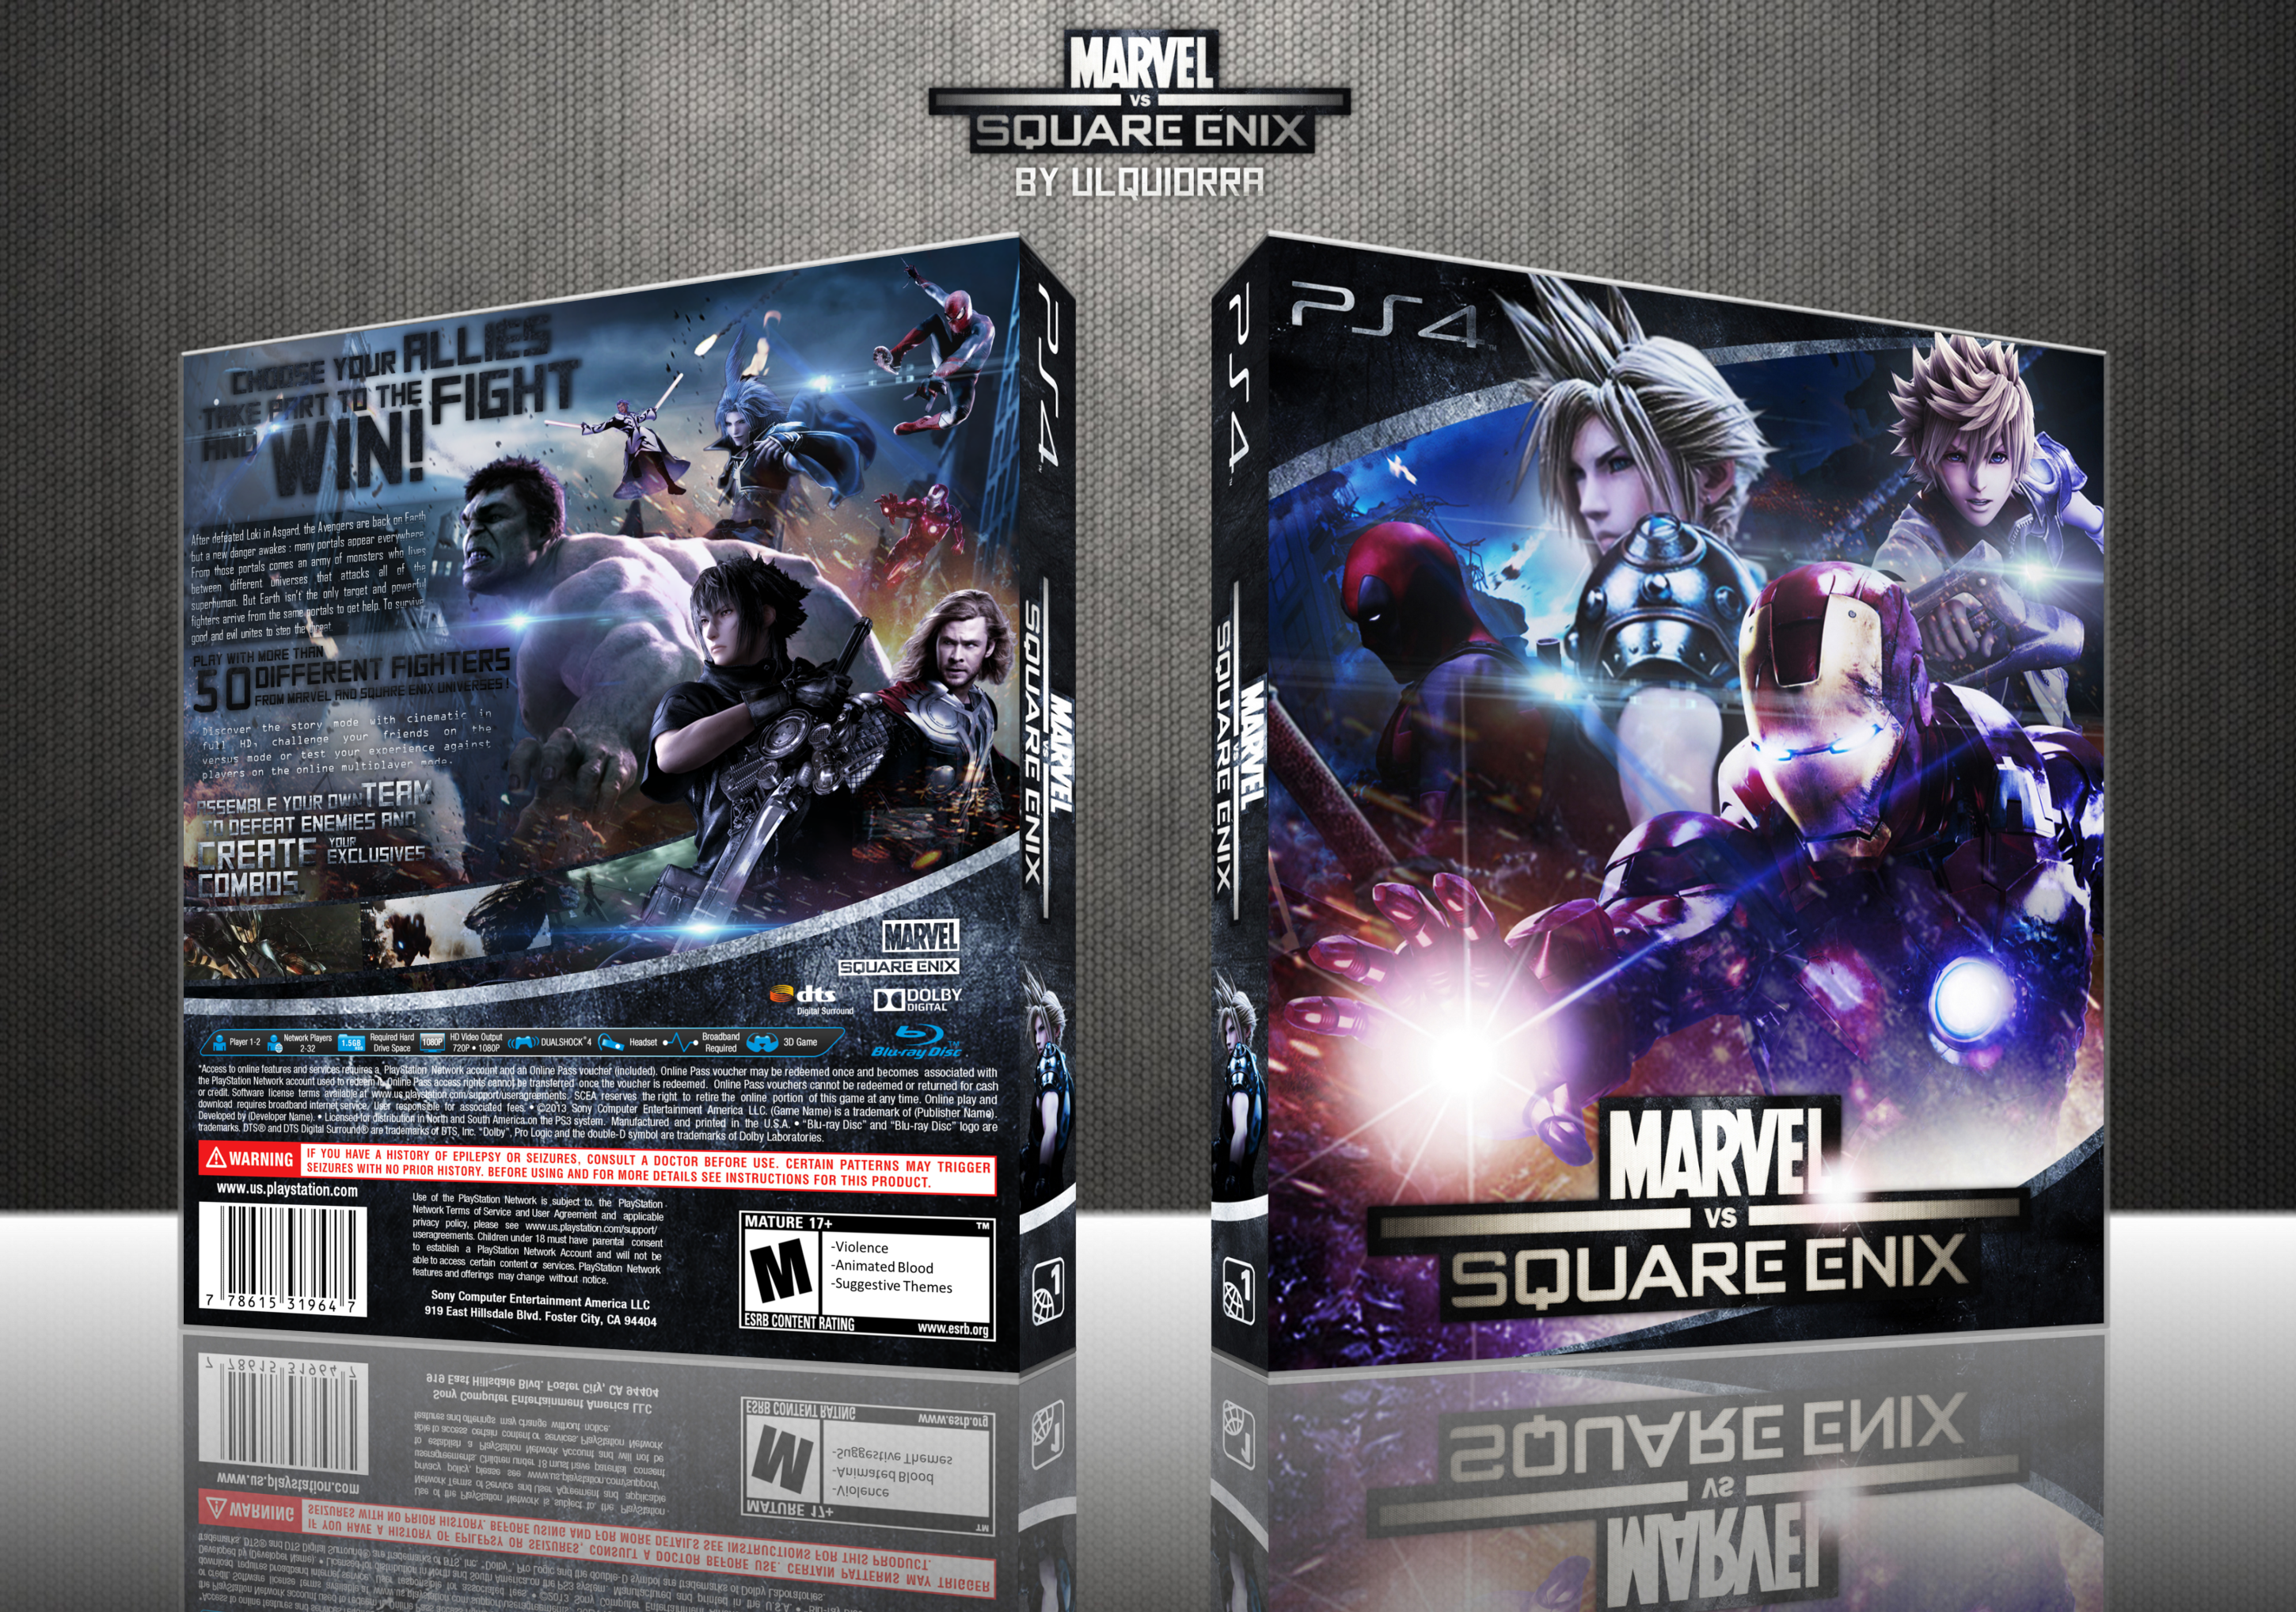 Marvel vs Square Enix box cover